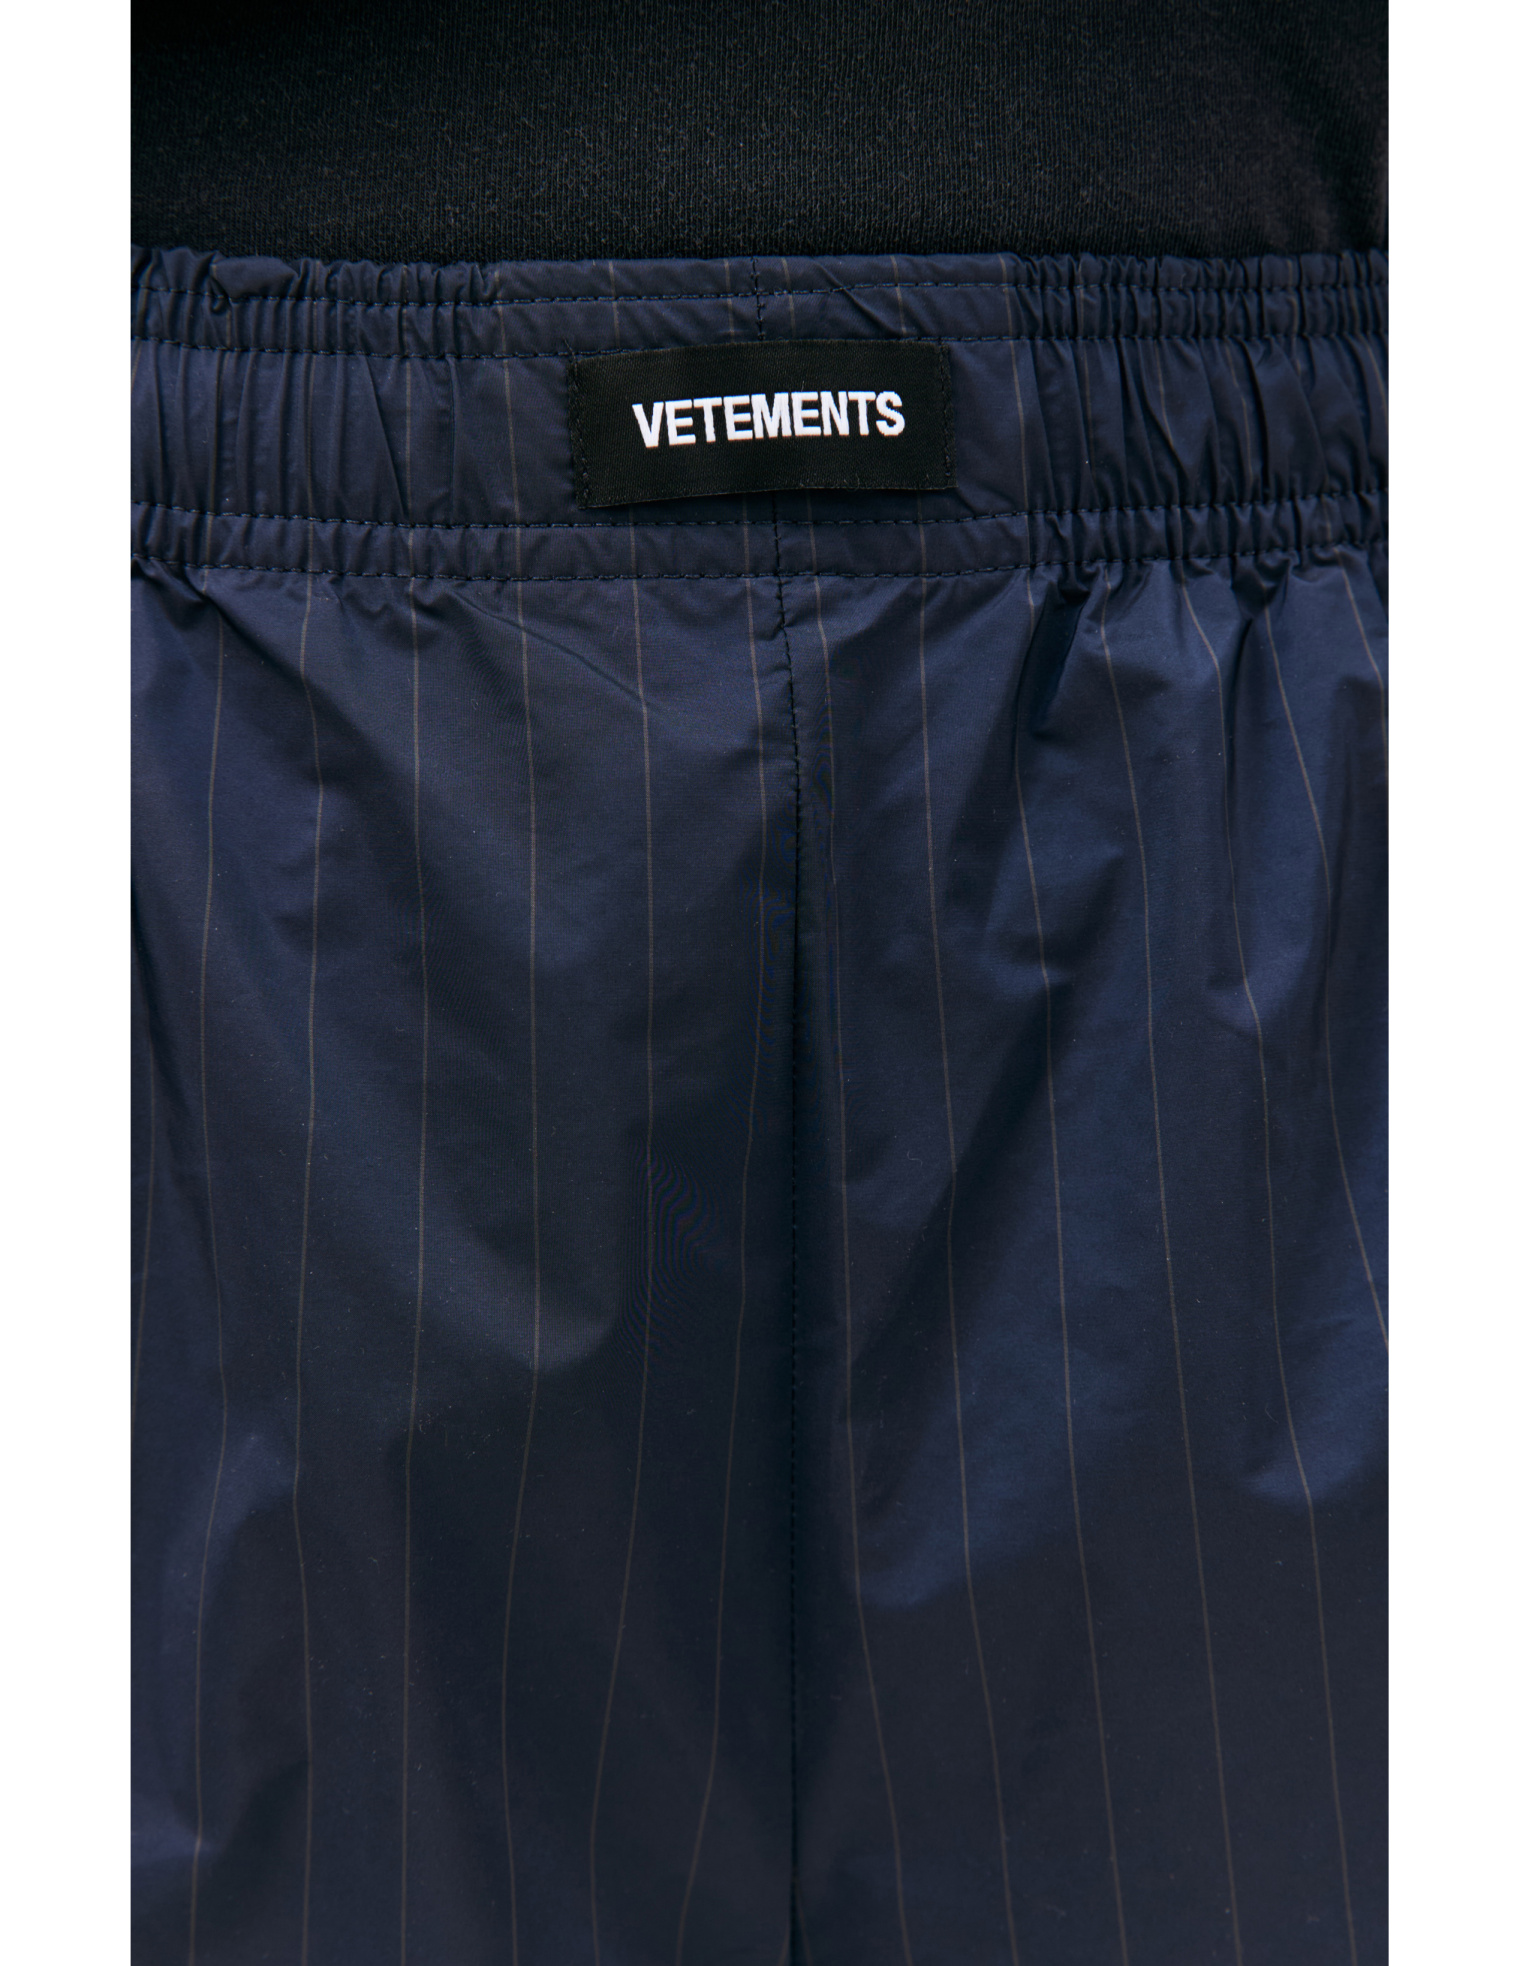 VETEMENTS Navy blue striped shorts